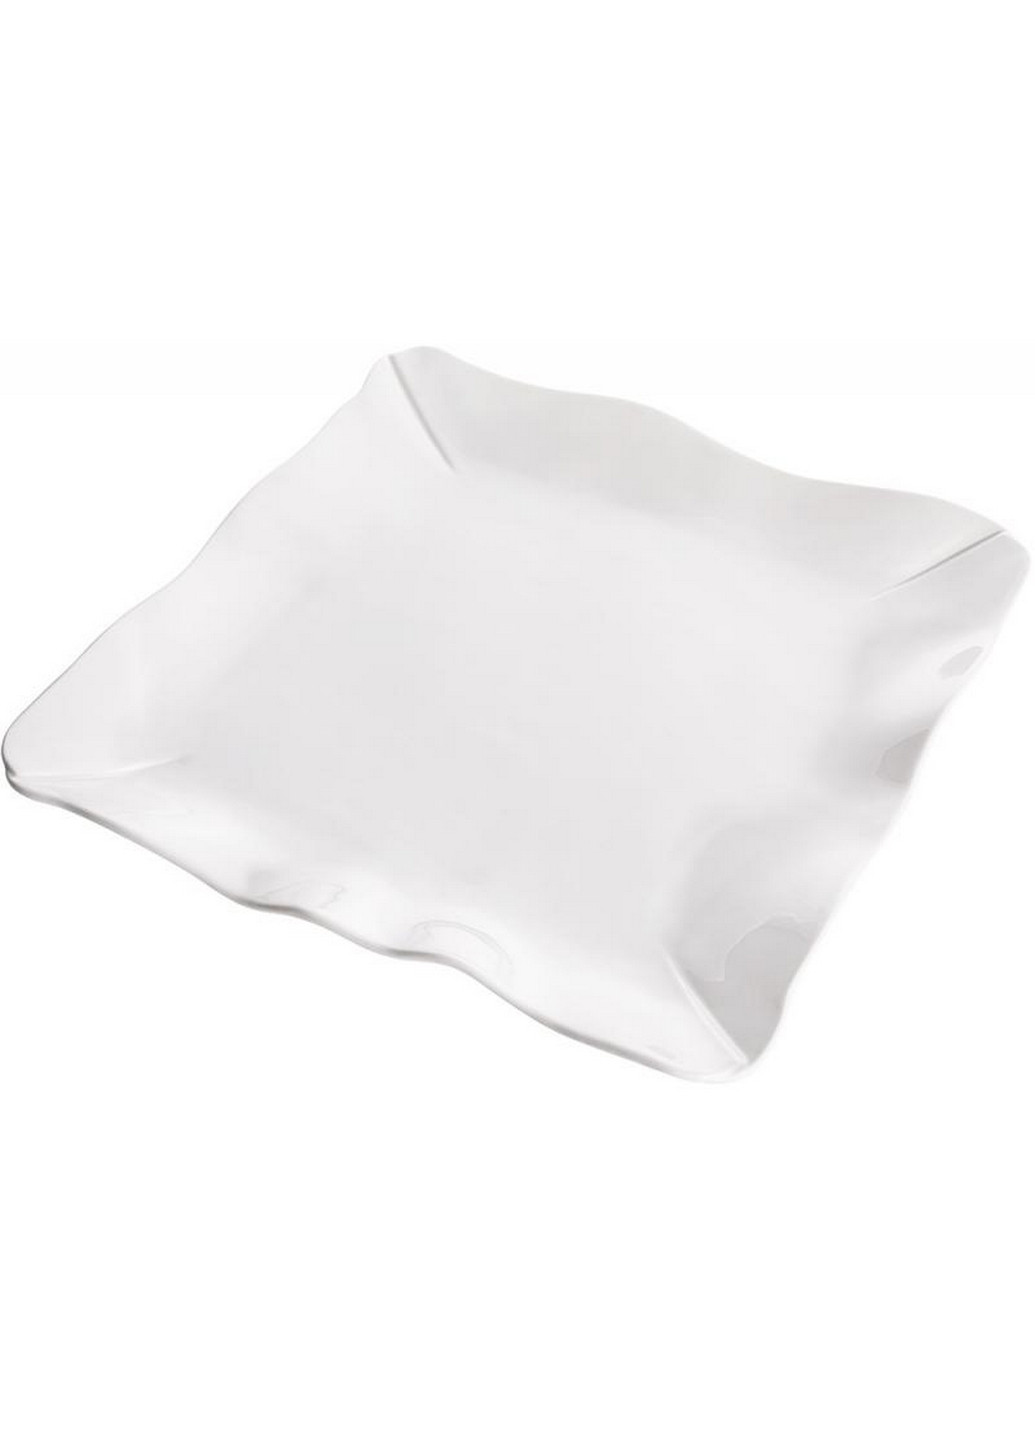 Тарелки квадратные White City Волна, набор 2 фарфоровые тарелки 25,5х25,5х2,5 см Bona (267149936)